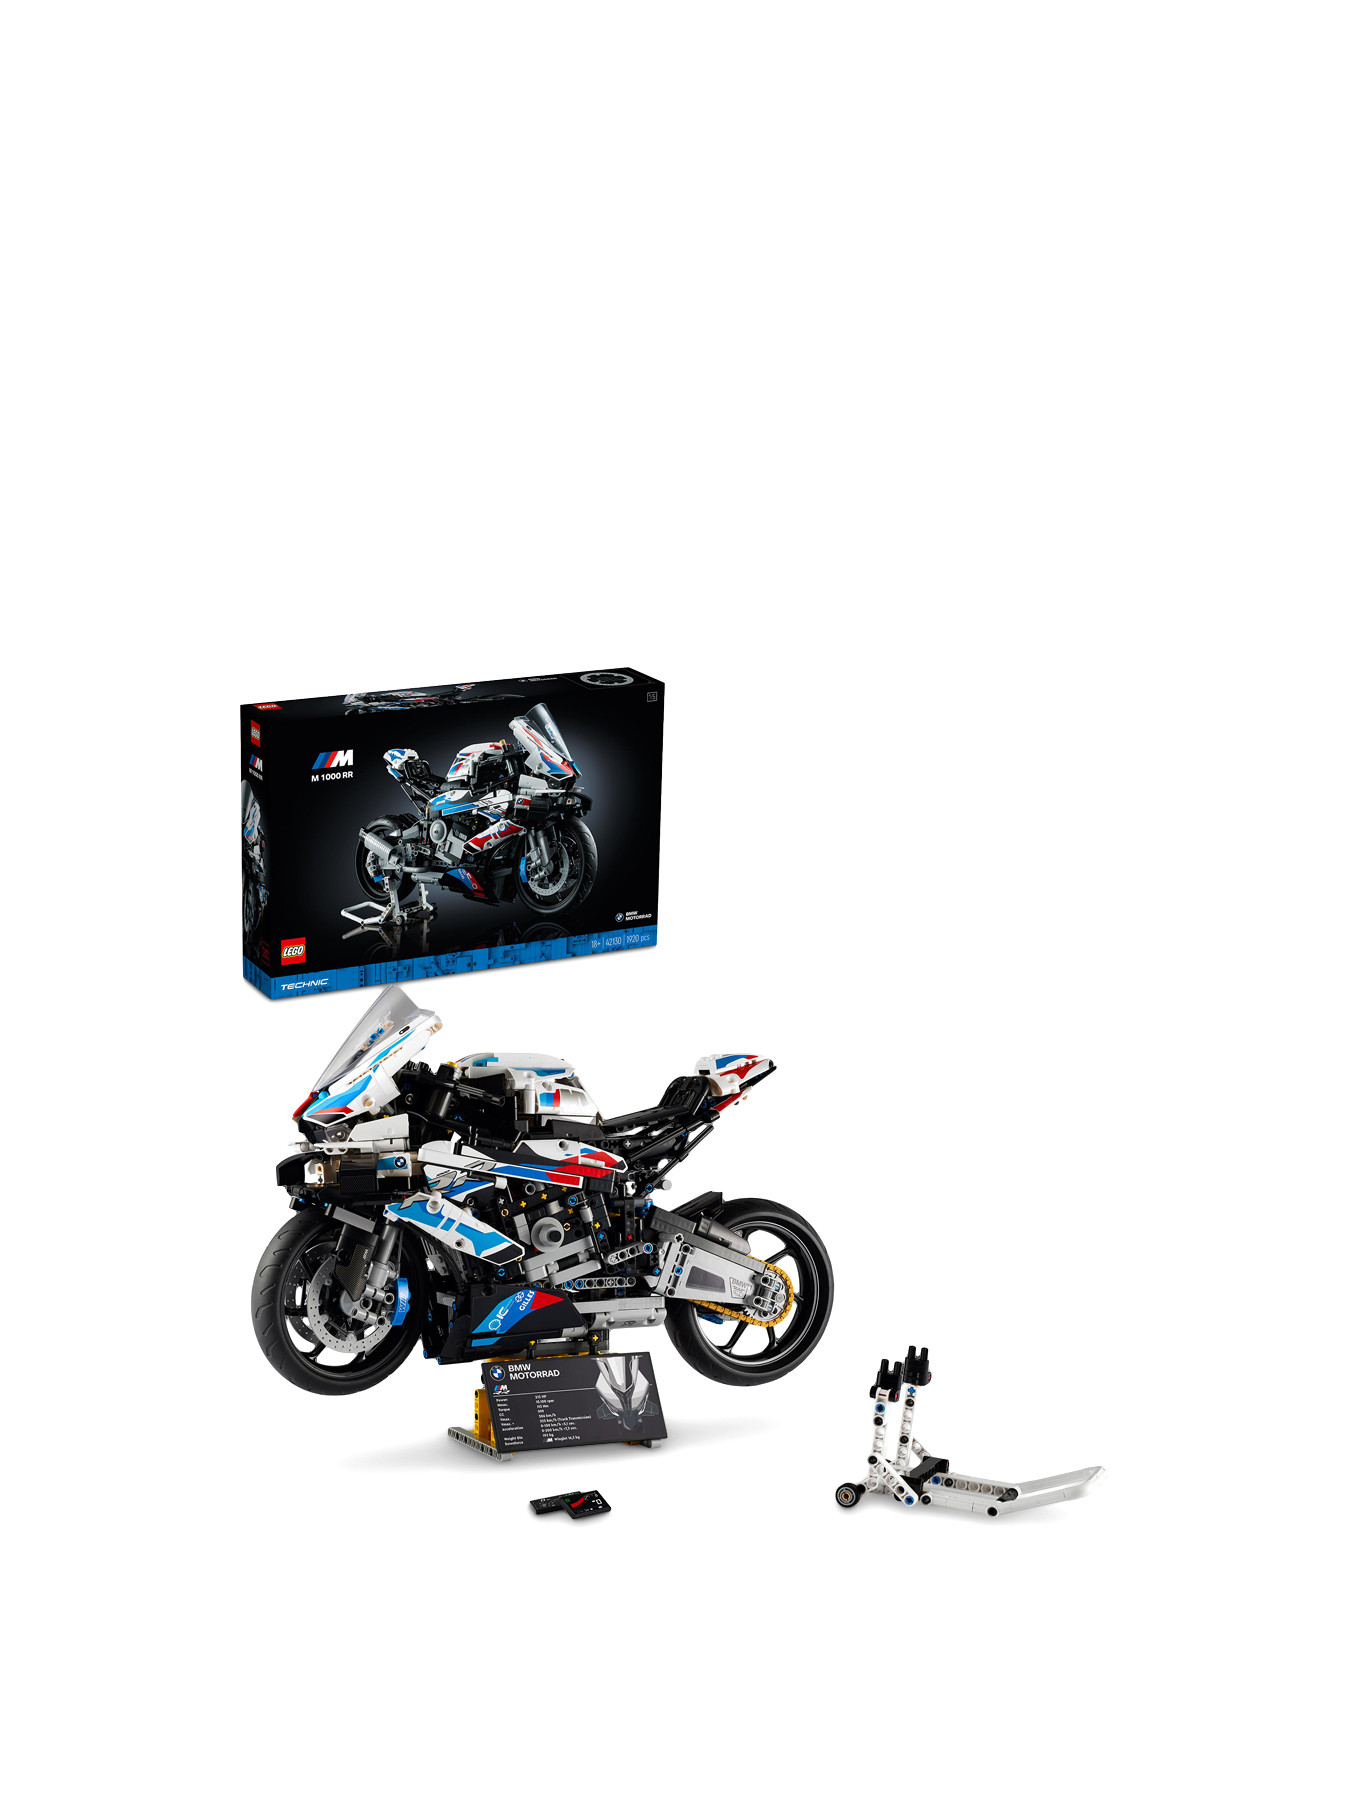 LEGO Technic BMW Motorrad M 1000 RR Motorcycle Super Bike 42130 (1,920pcs)  18+